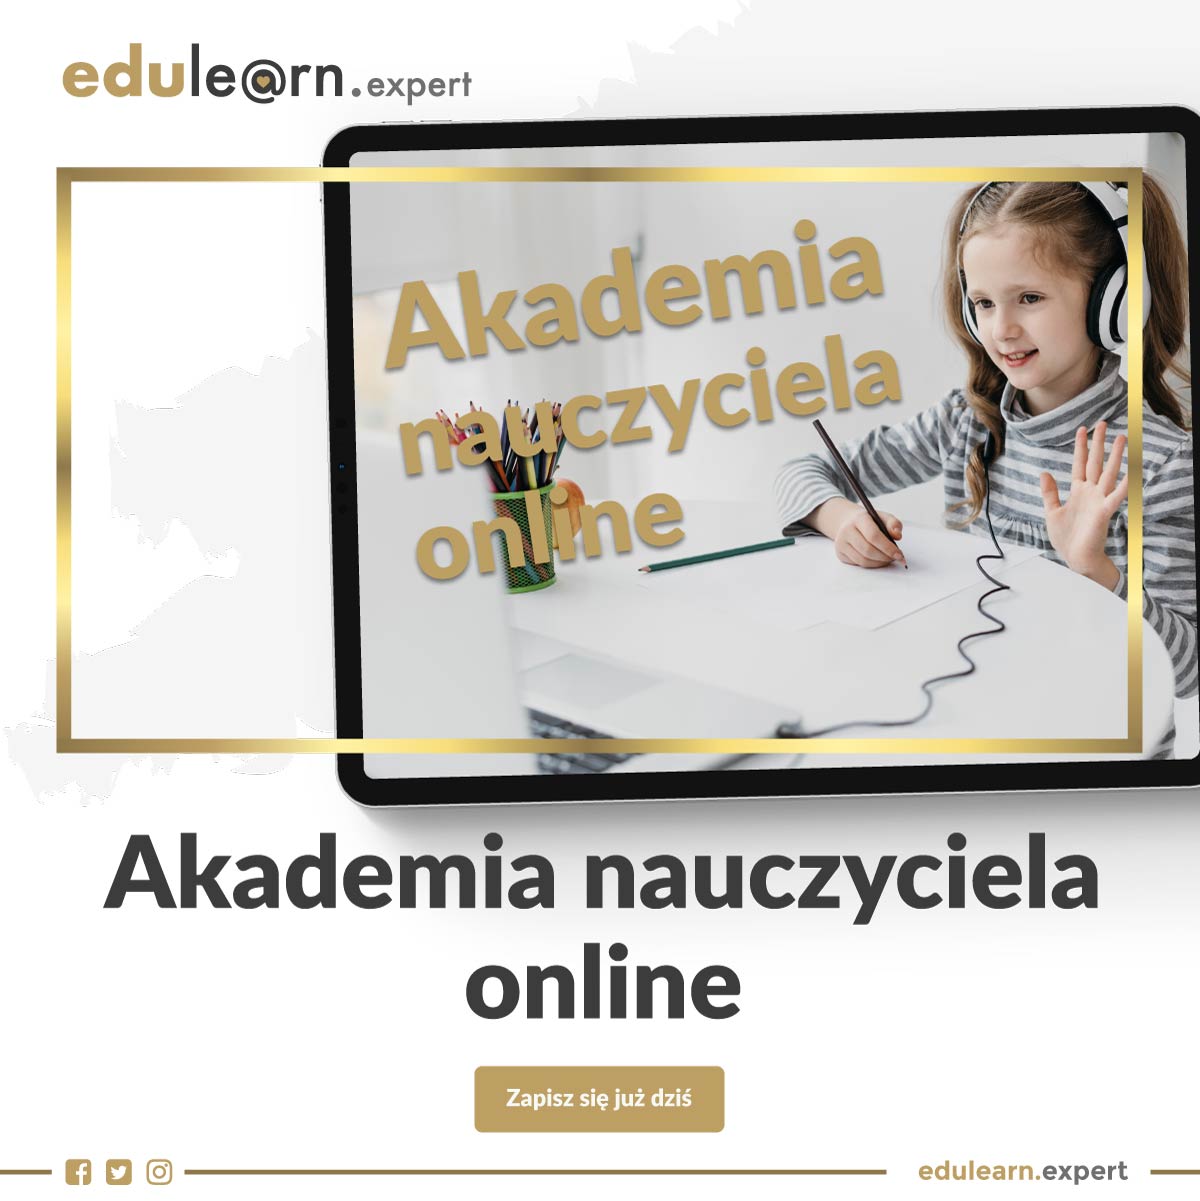 edulearn.expert | Akademia nauczyciela online